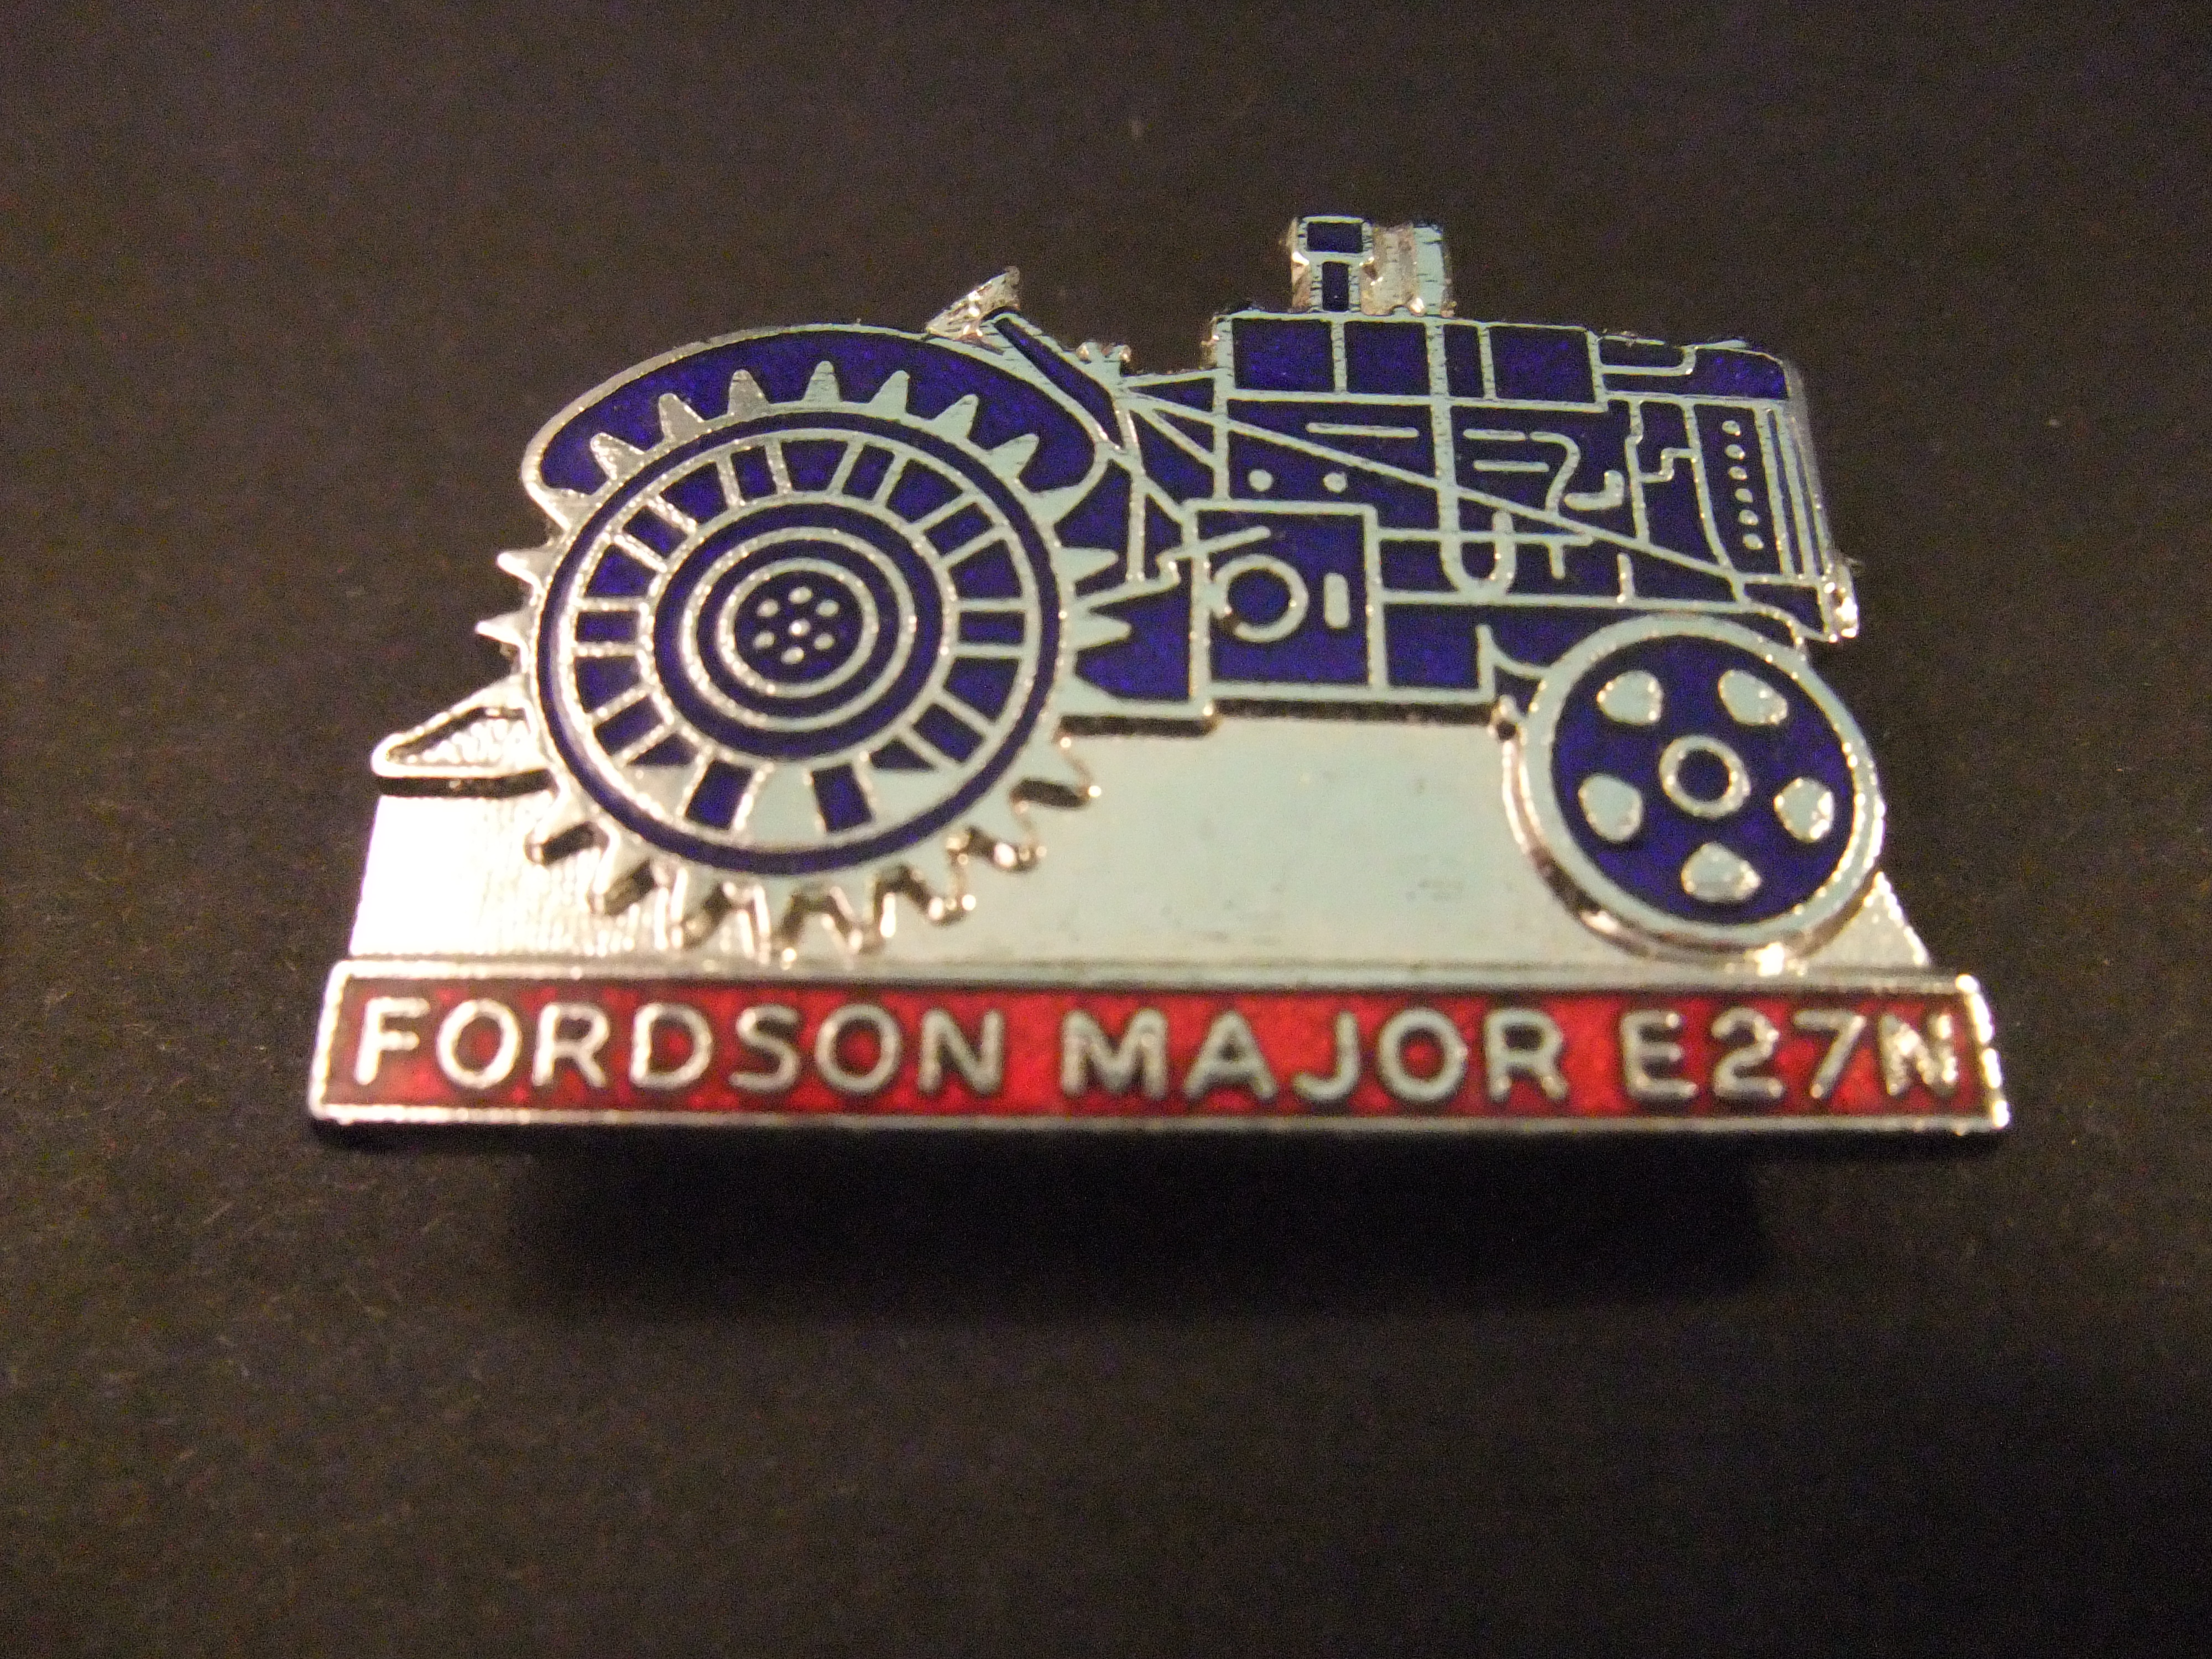 Fordson Major Model E27N ( Blauwe Reiger ) tracktor